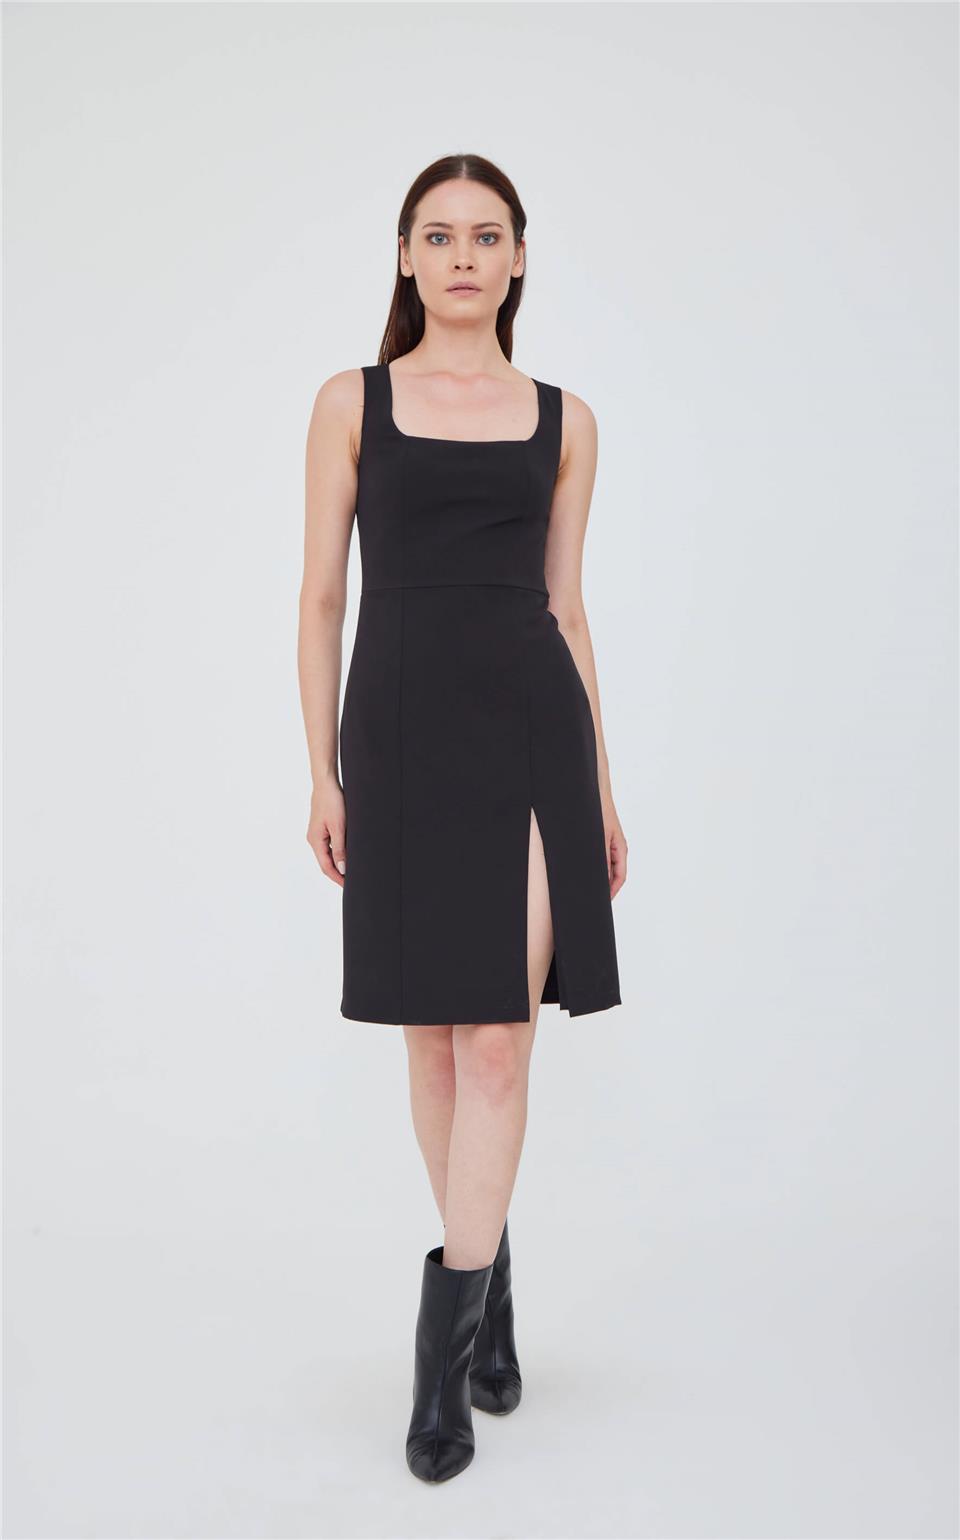 A model wears LFN10779 - Femınıne Mıdı Dress Wıth Slıt Deep Ink Black - Siyah, wholesale Dress of Lefon to display at Lonca